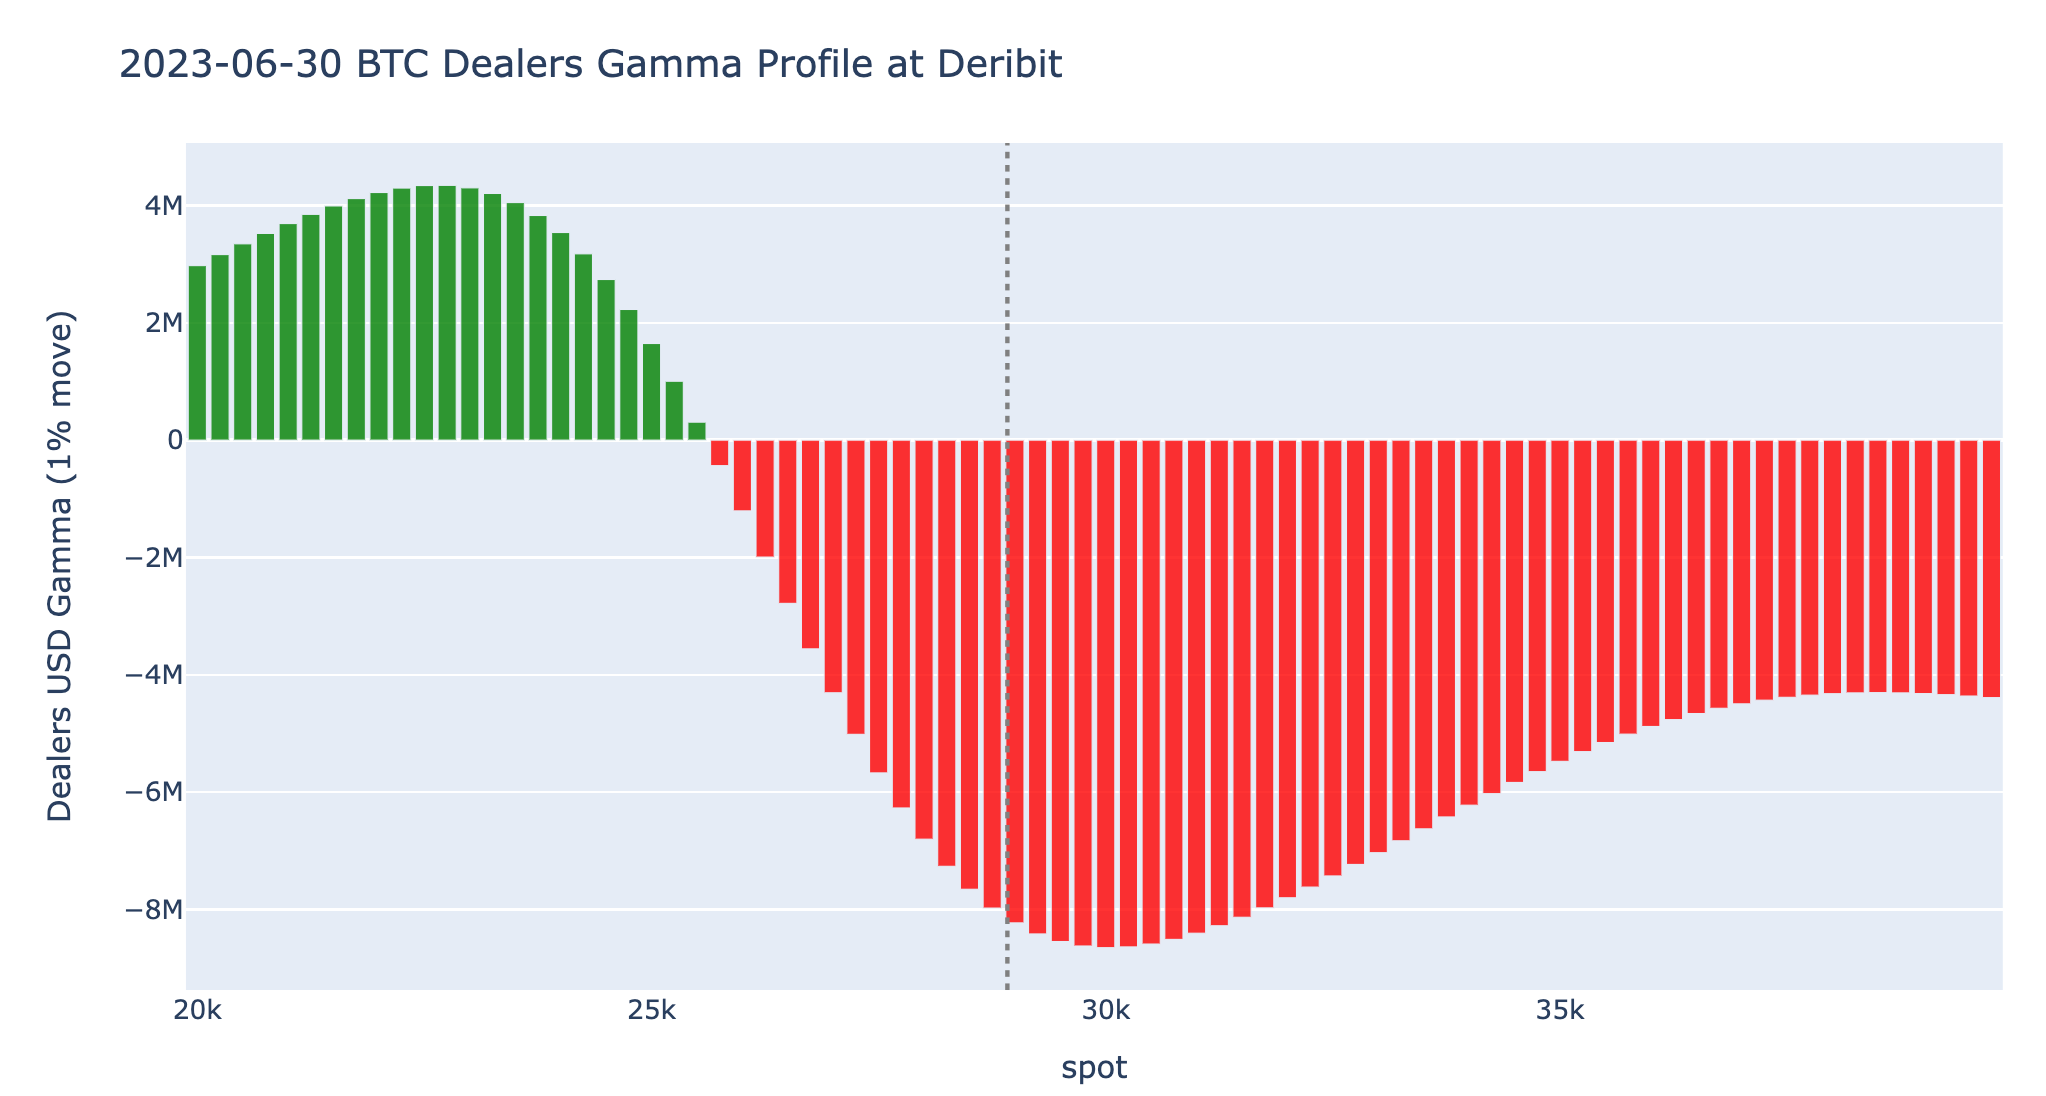 Amberdata derivatives BTC dealers gamma profile at Deribit